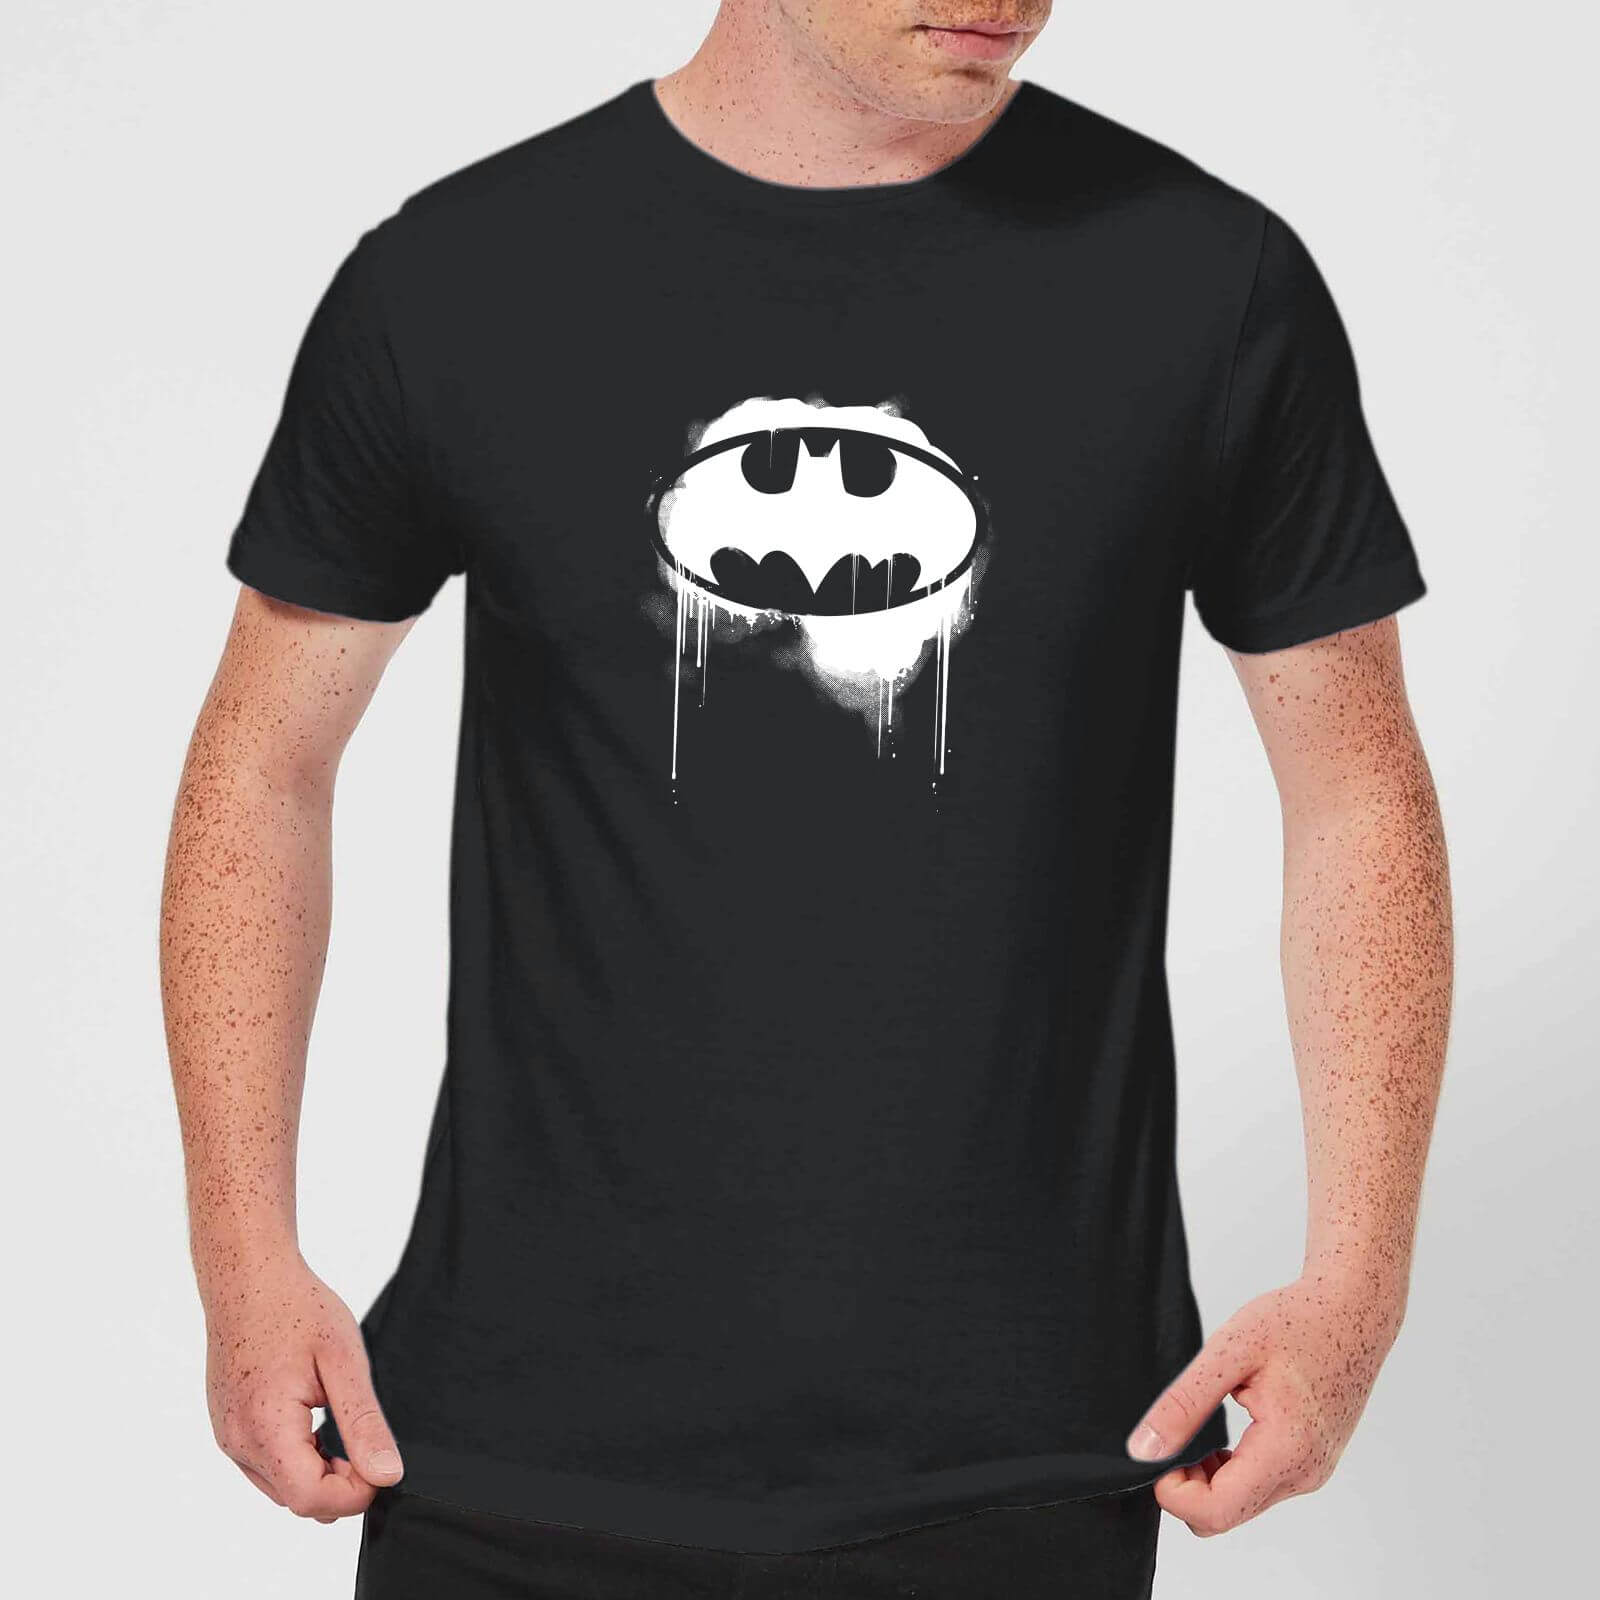 Justice League Graffiti Batman Men's T-Shirt - Black - S - Black